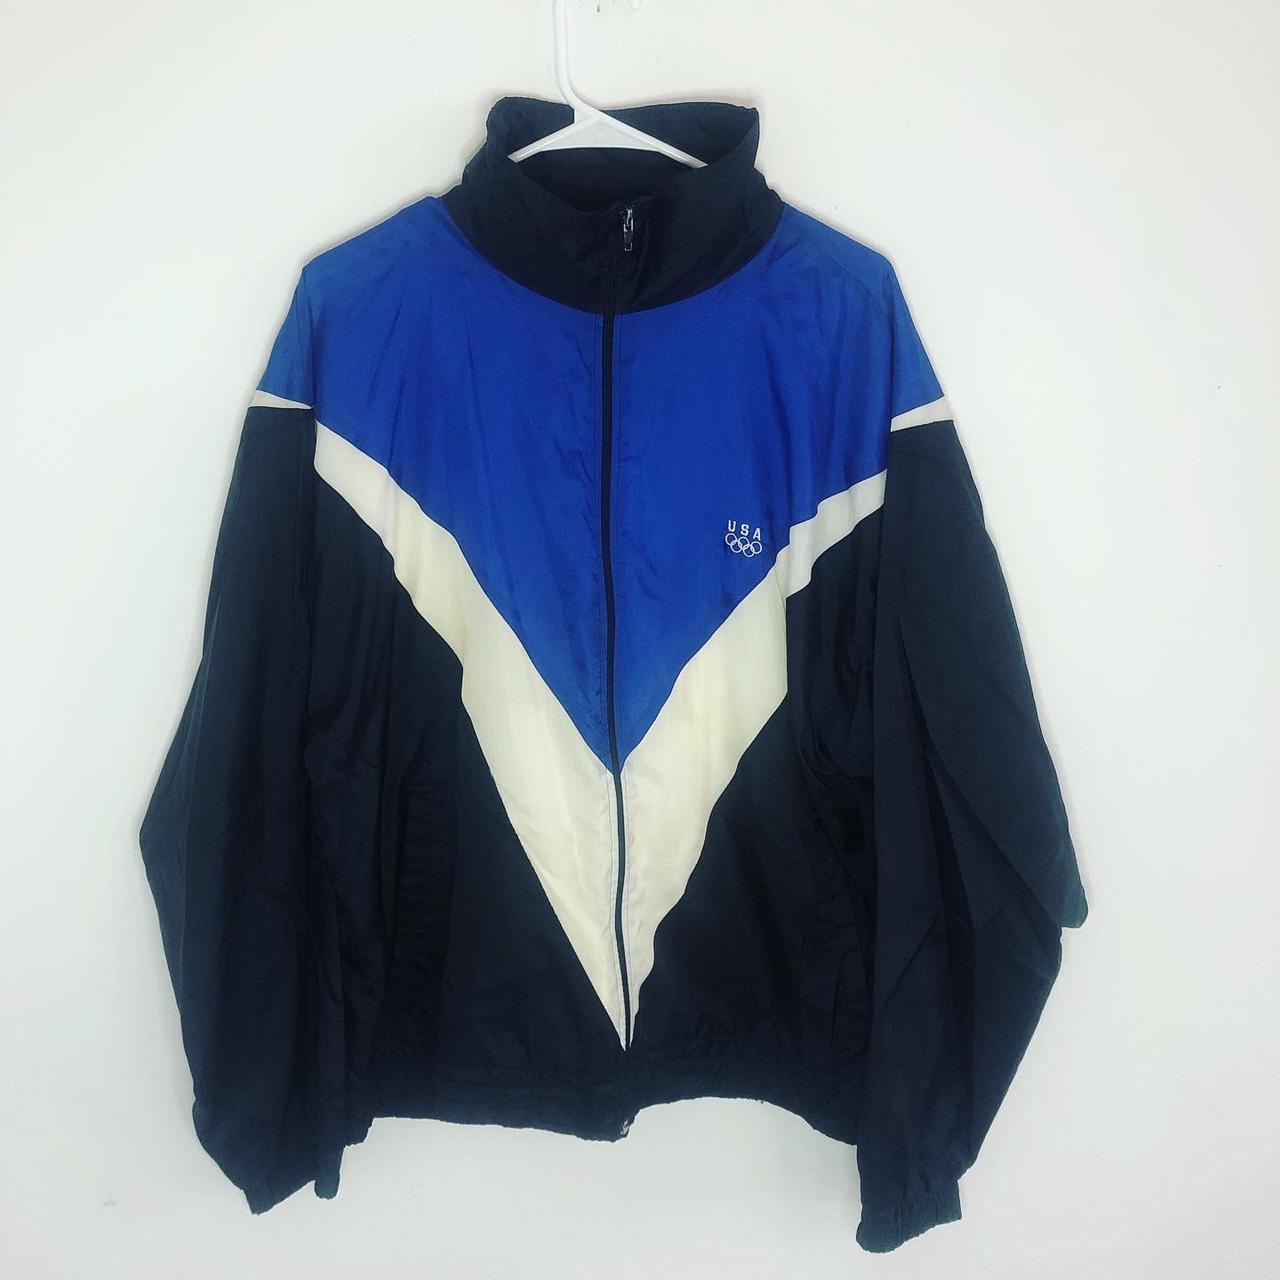 Vintage 90s USA Olympic team wind breaker jacket... - Depop